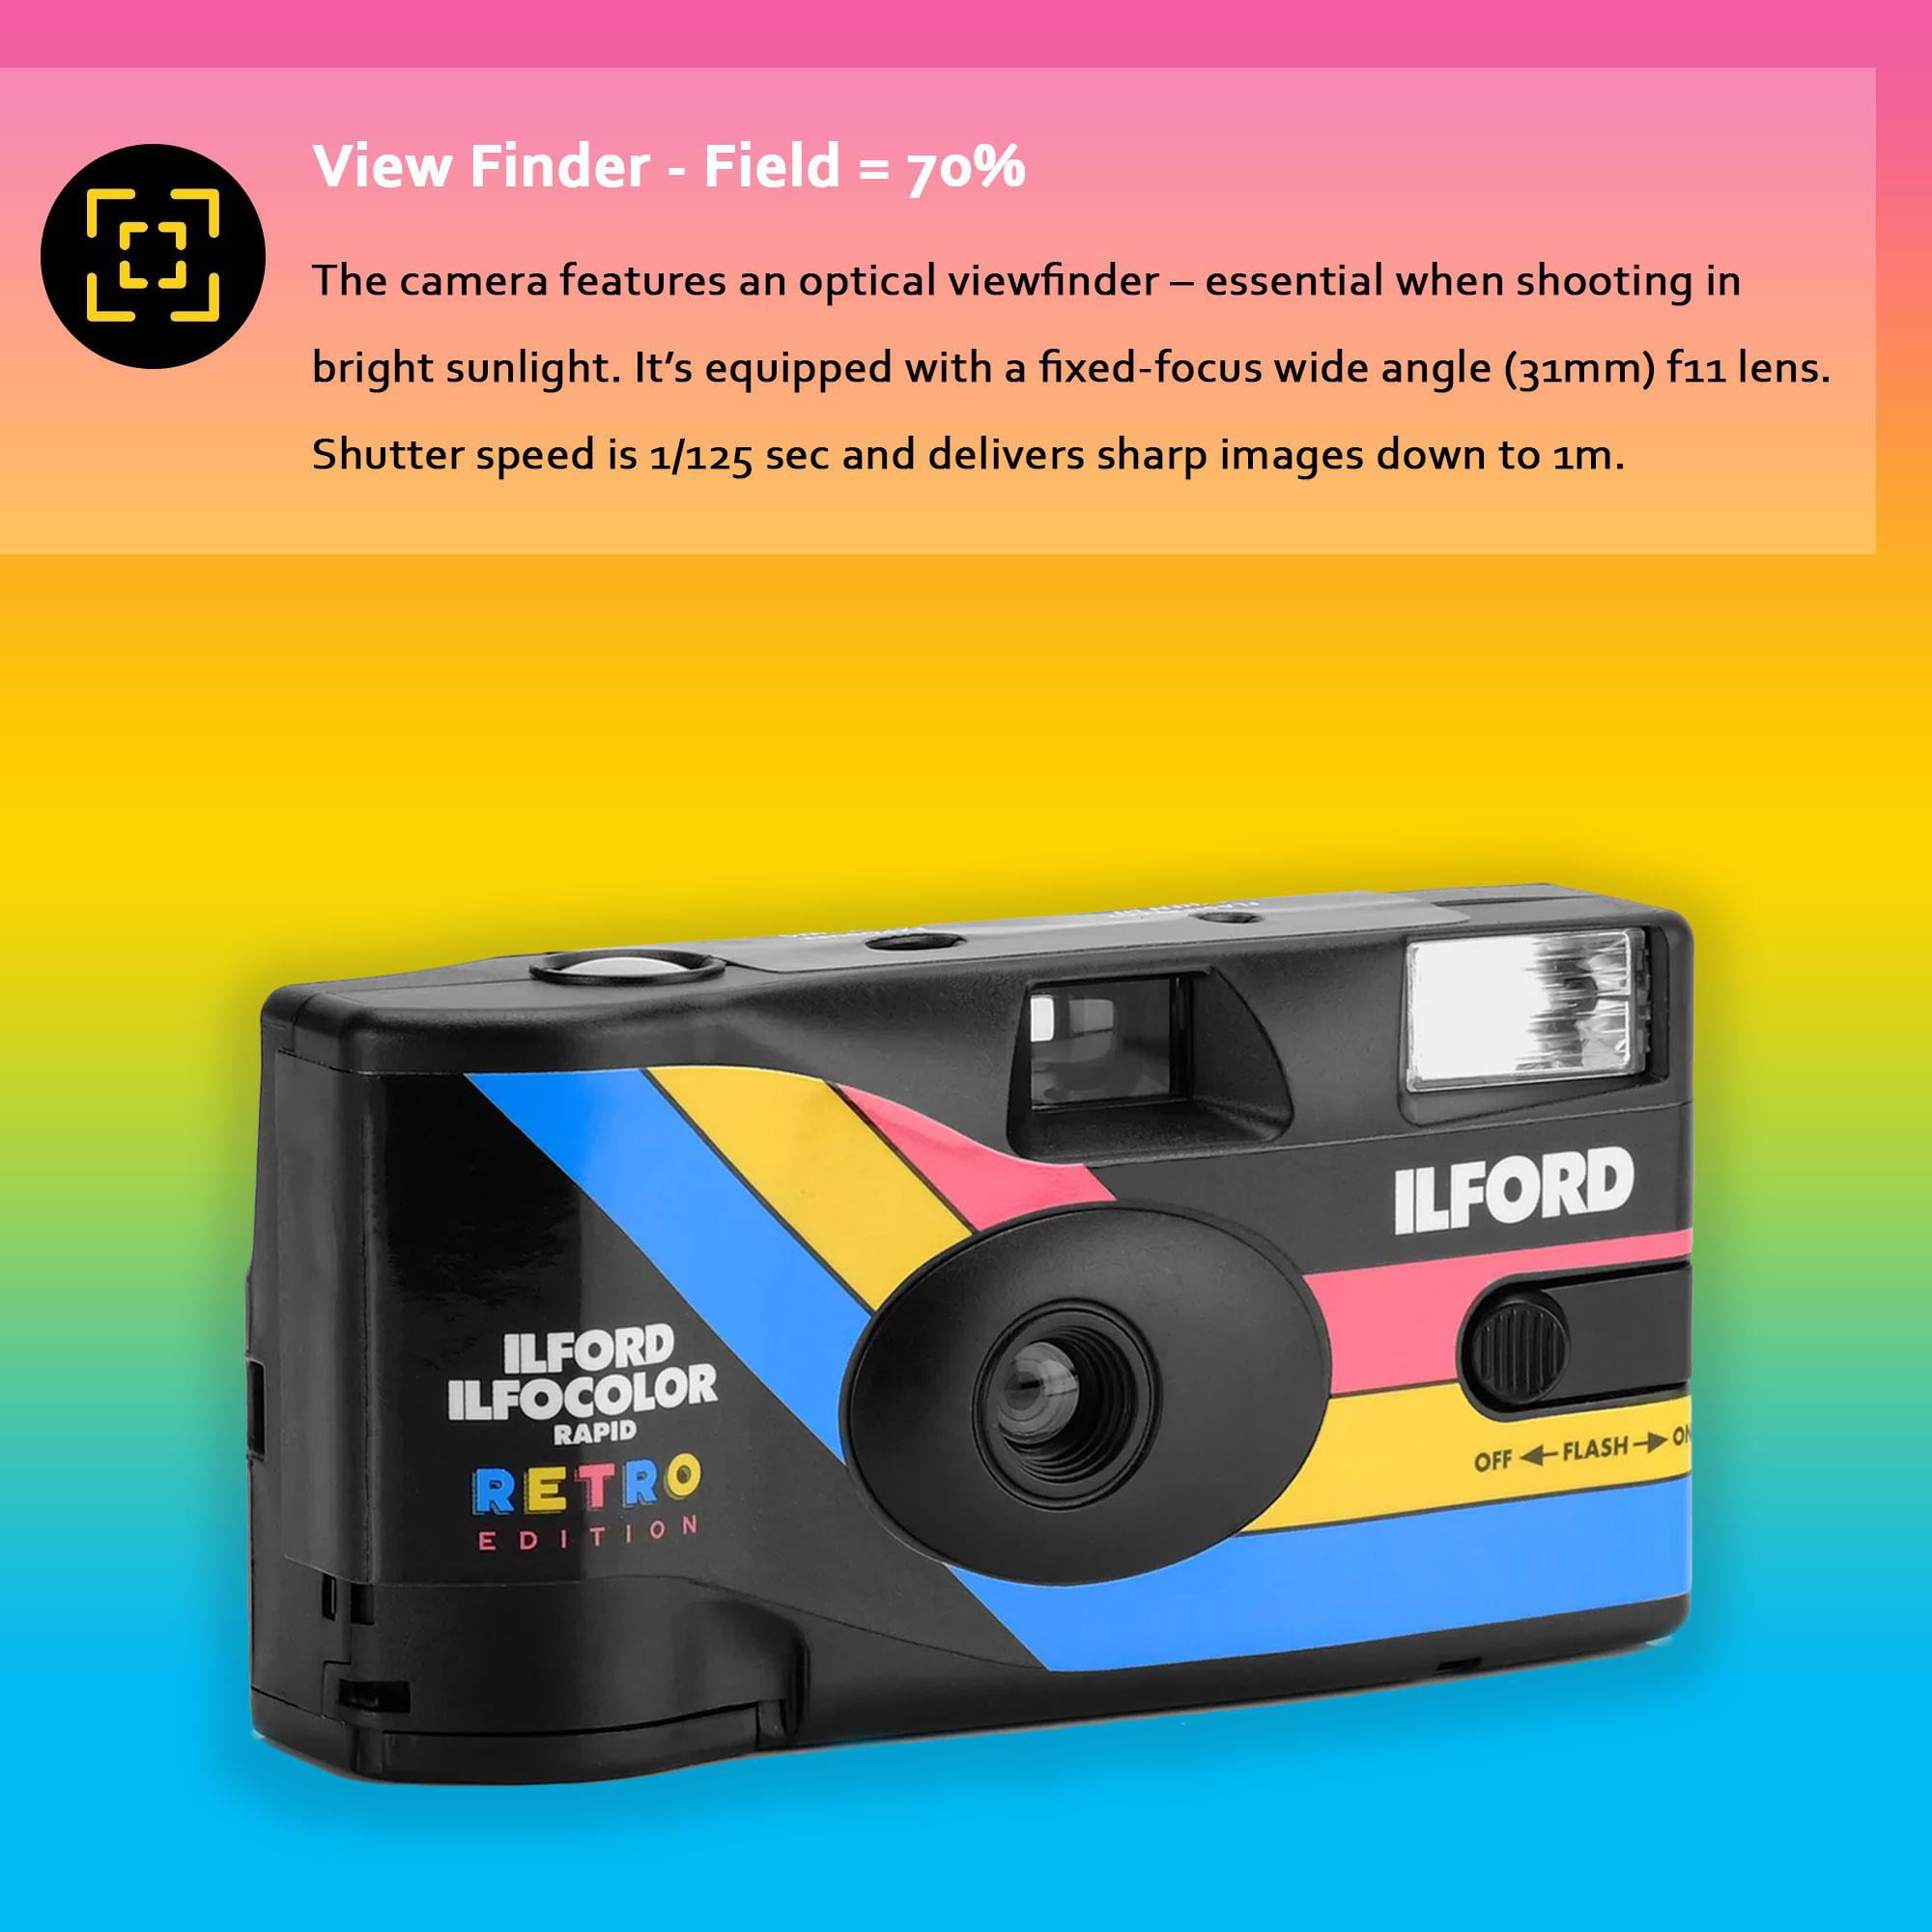 ILFORD Ilfocolor Rapid Retro Single Use Film Camera 27-exposure 400 ISO  2005154 